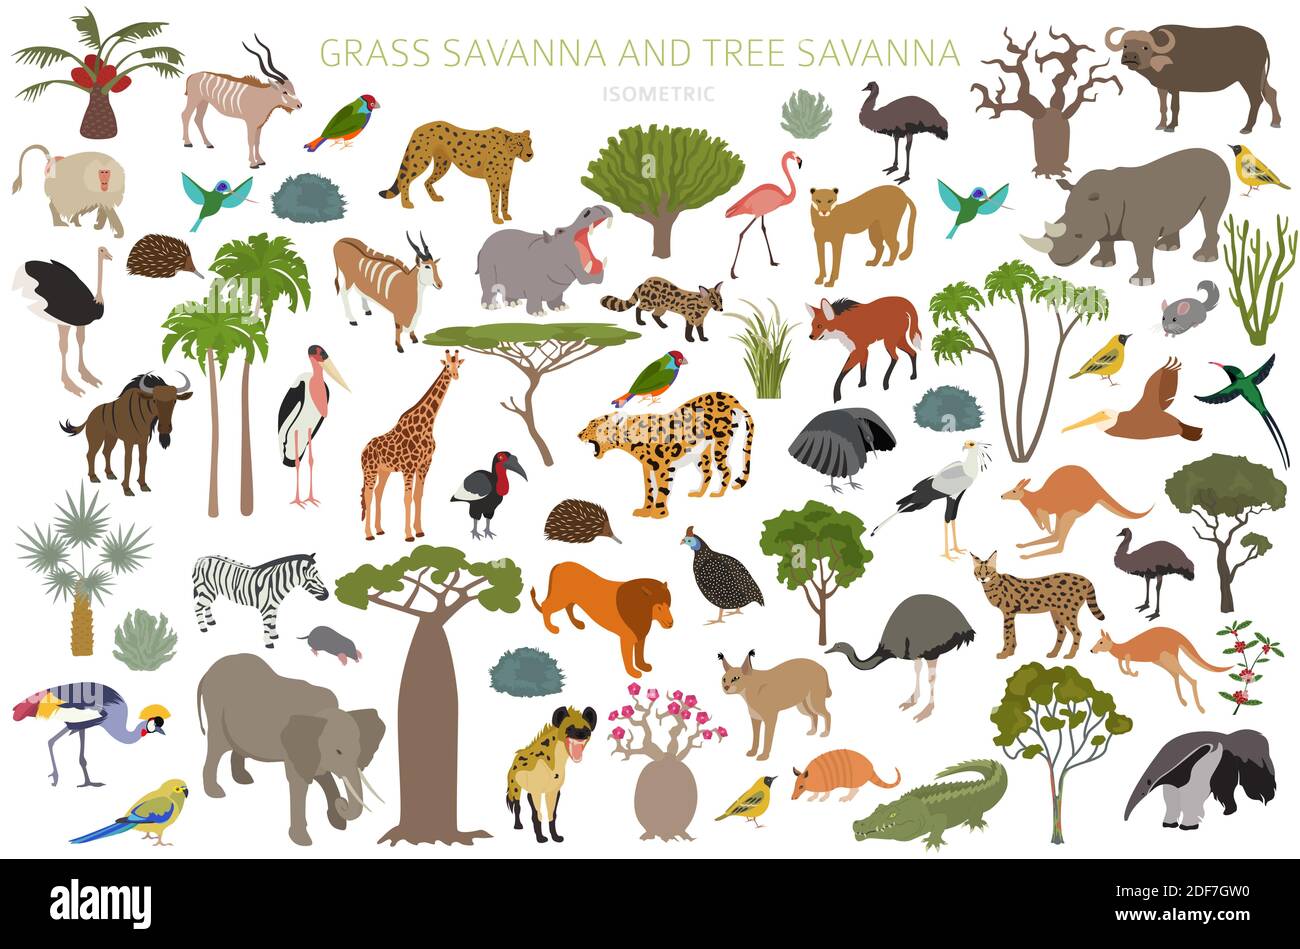 Tree savanna and grass savanna biome, natural region isometric 3d infographic. Woodland and grassland savannah, prarie, pampa. Animals, birds and vege Stock Vector